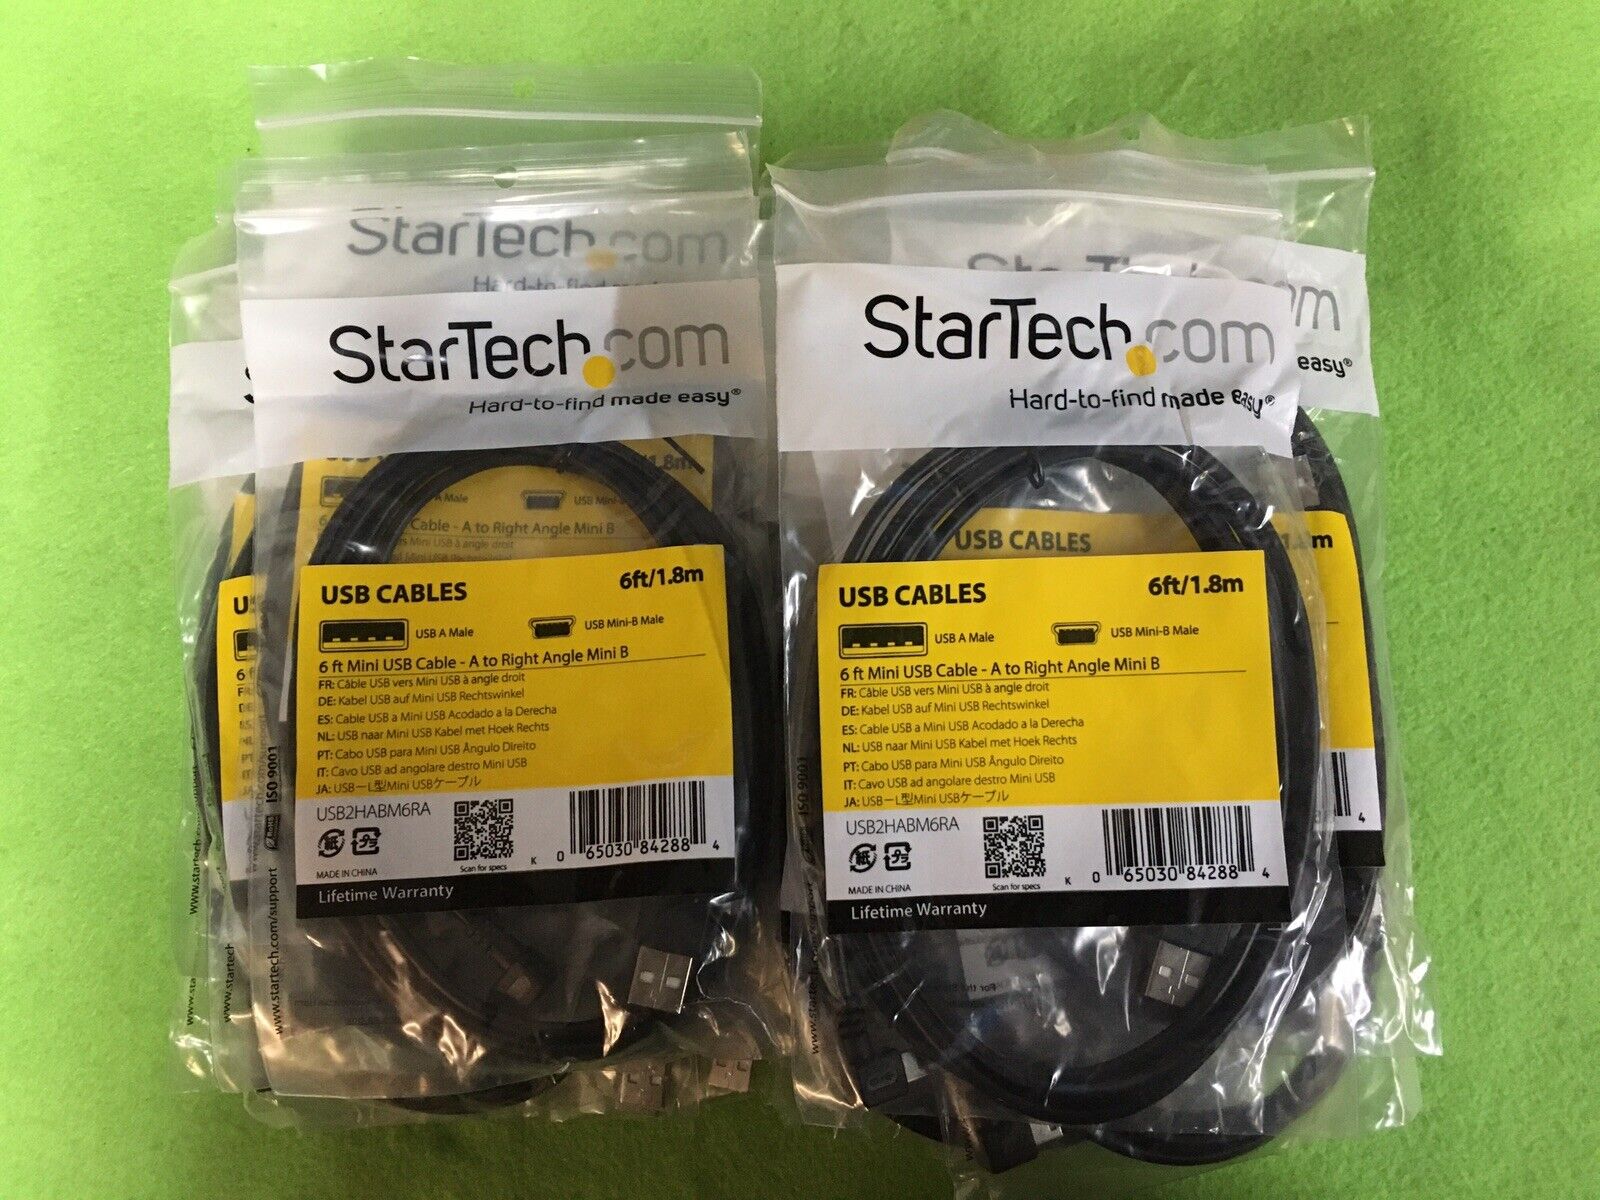 LOT OF 27: StarTech USB2HABM6RA 6 ft Mini USB Cable A to Right Angle Mini B